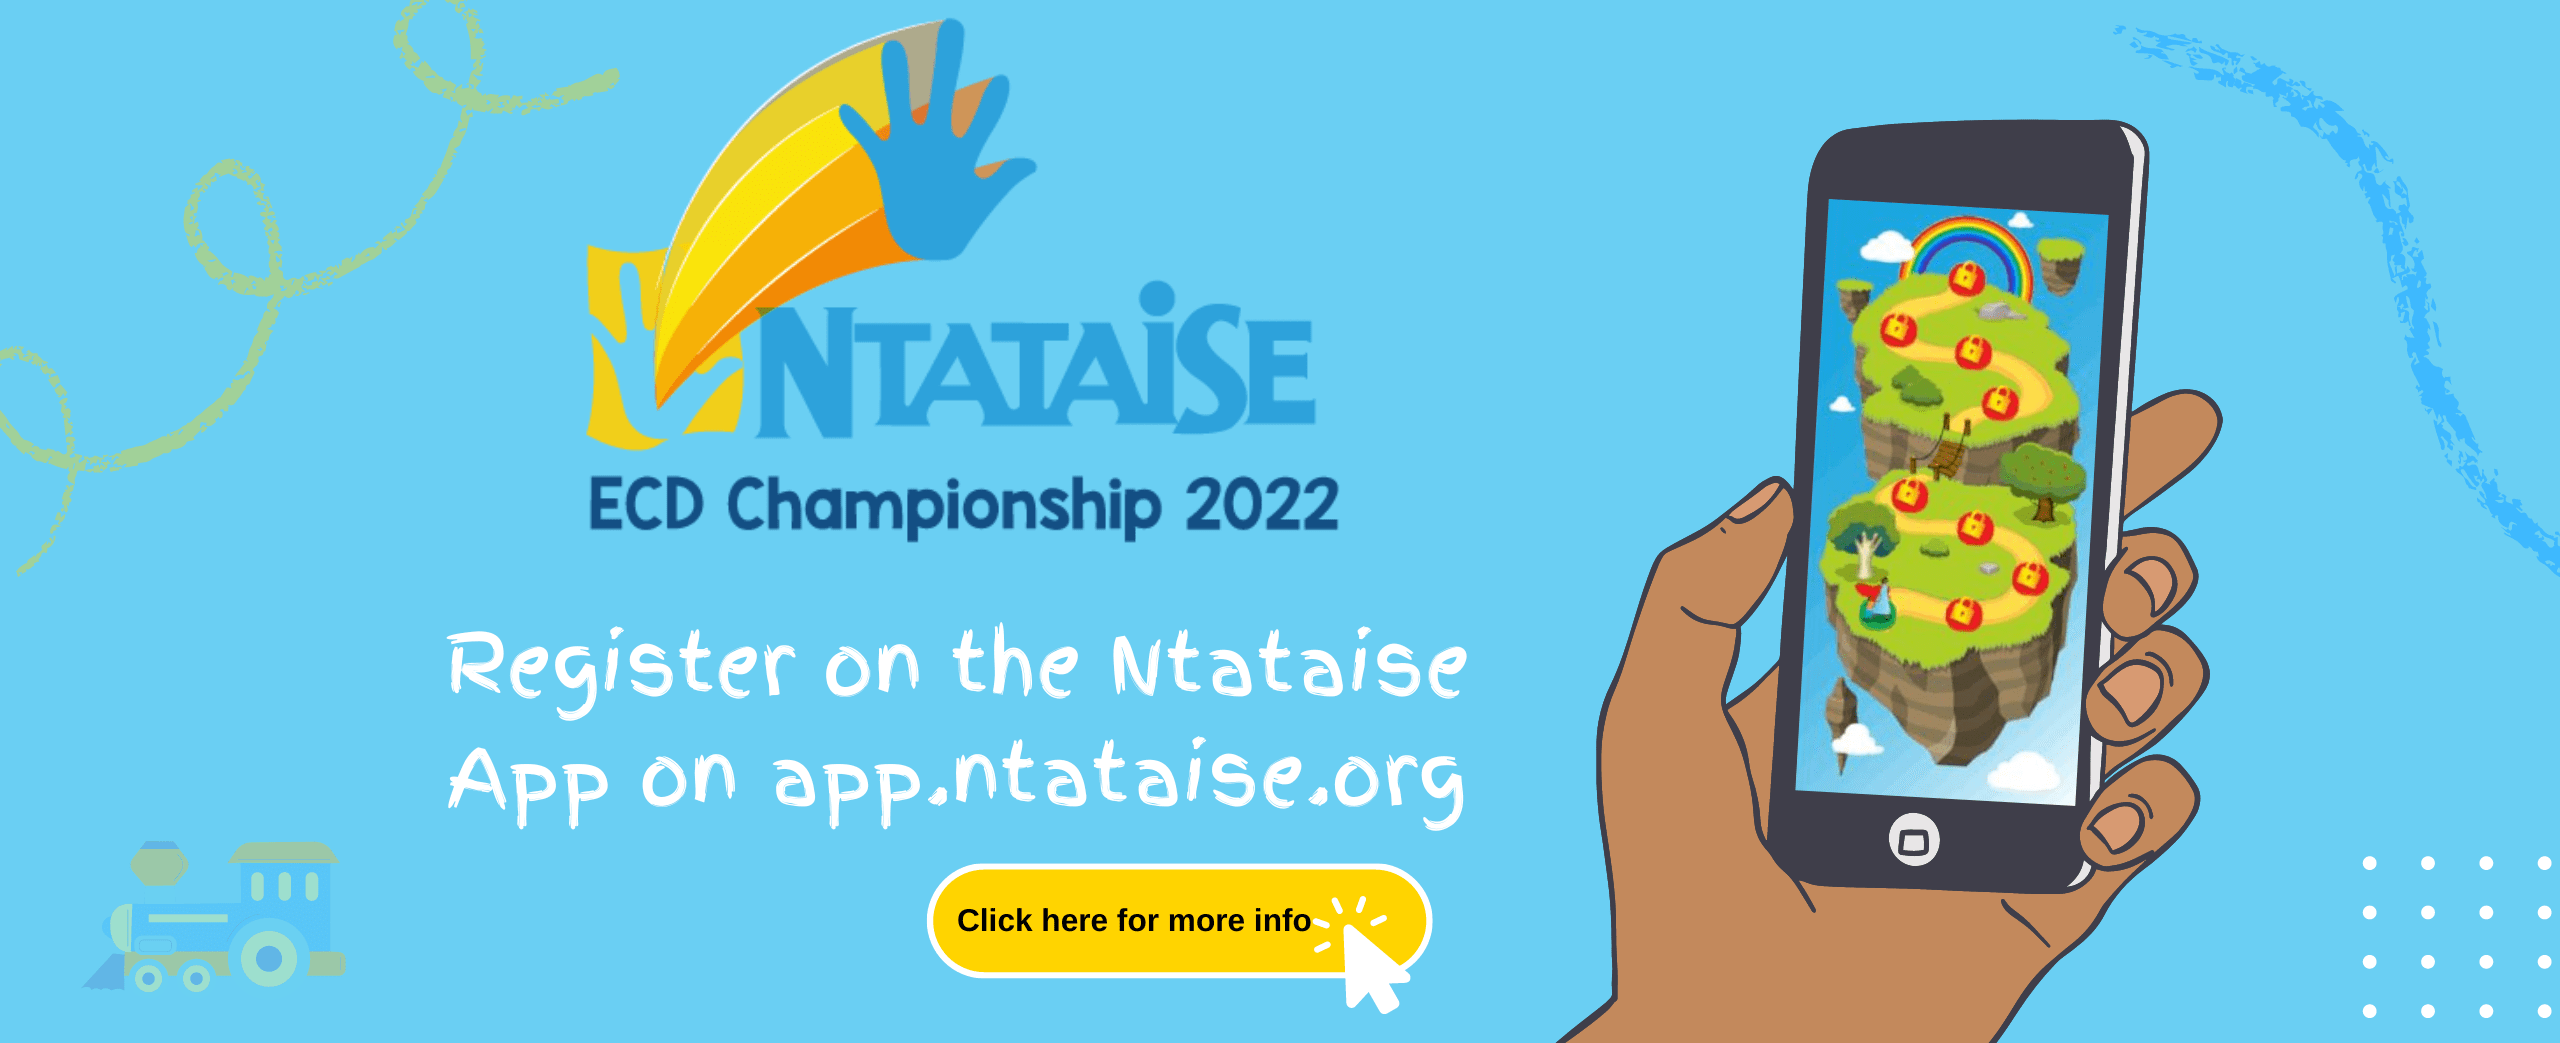 The Ntataise ECD Championship 2022